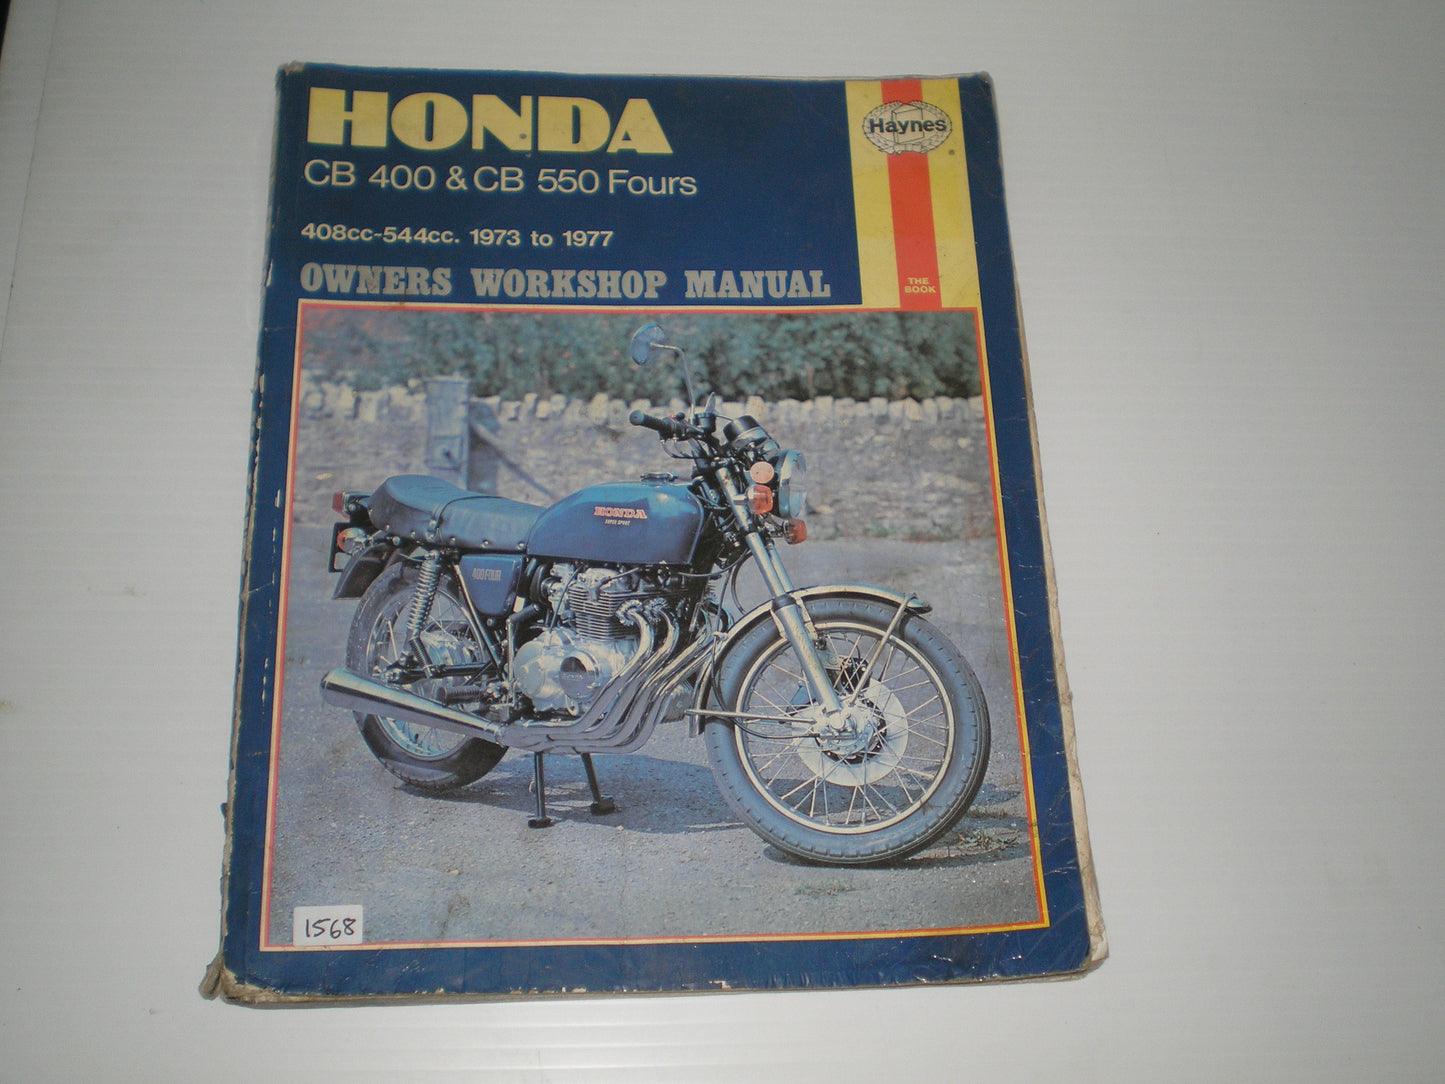 HONDA CB400  CB550 Fours  1973-1977  Hayes Workshop Manual 262  #1568